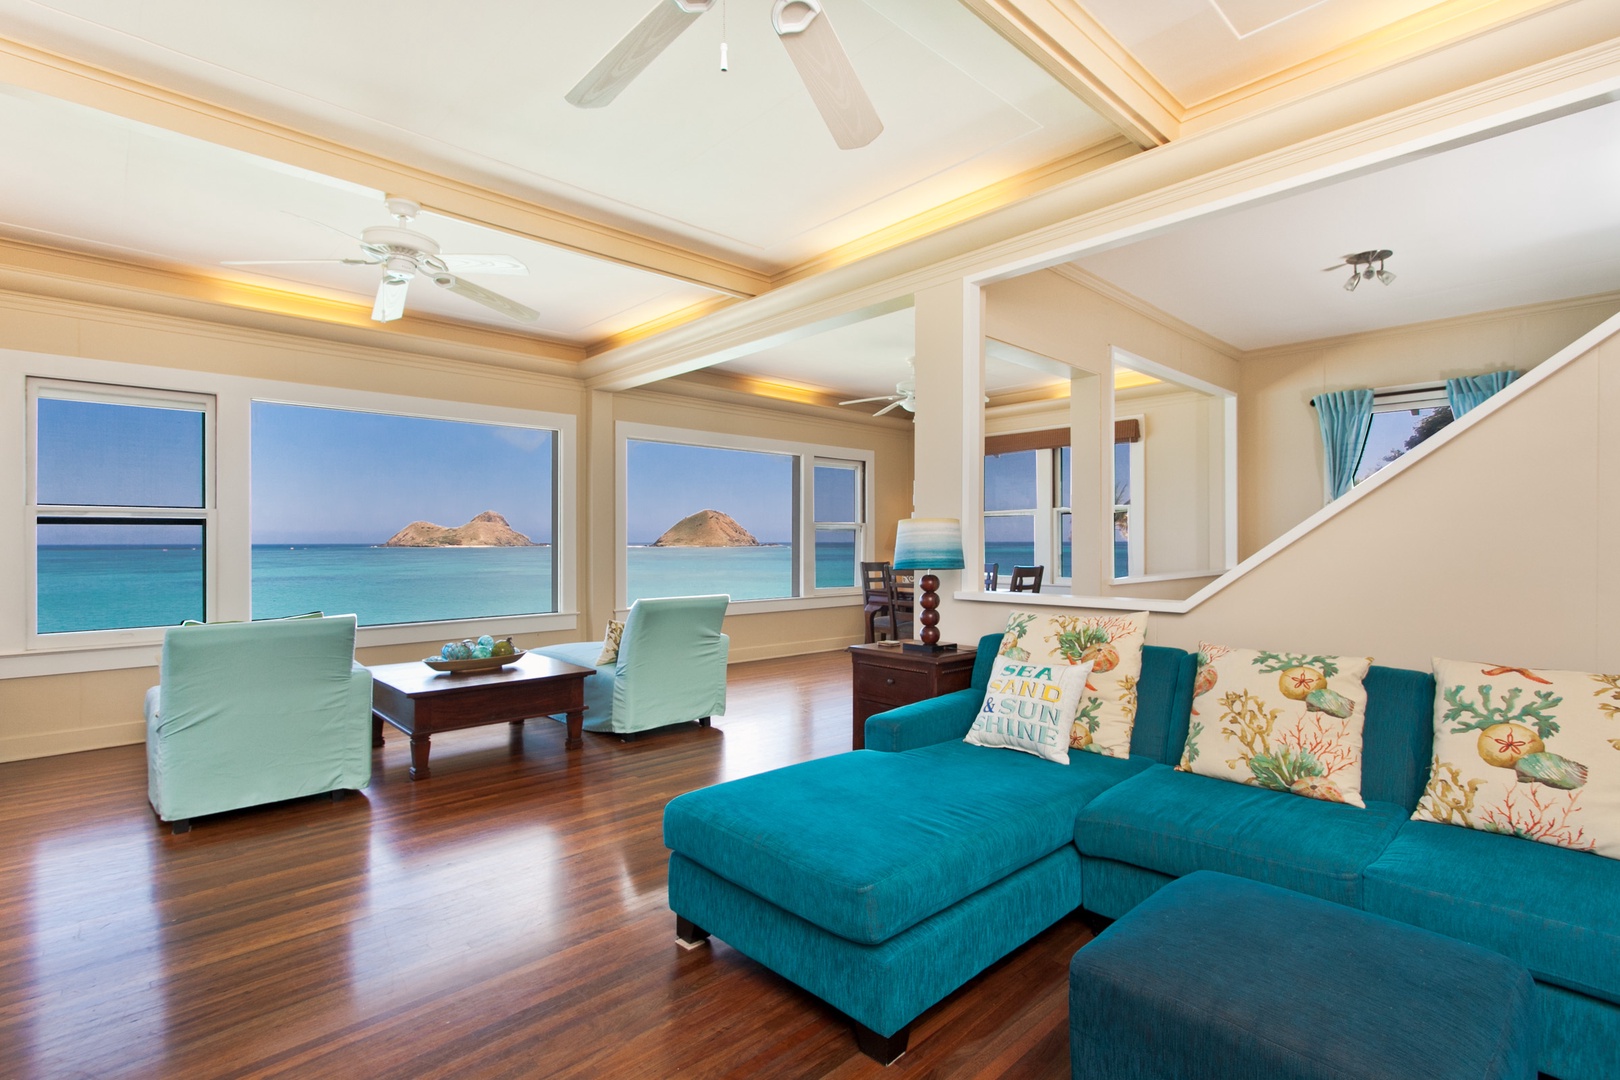 Kailua Vacation Rentals, Hale Mahina Lanikai* - Living area soaked in natural light and ocean views.